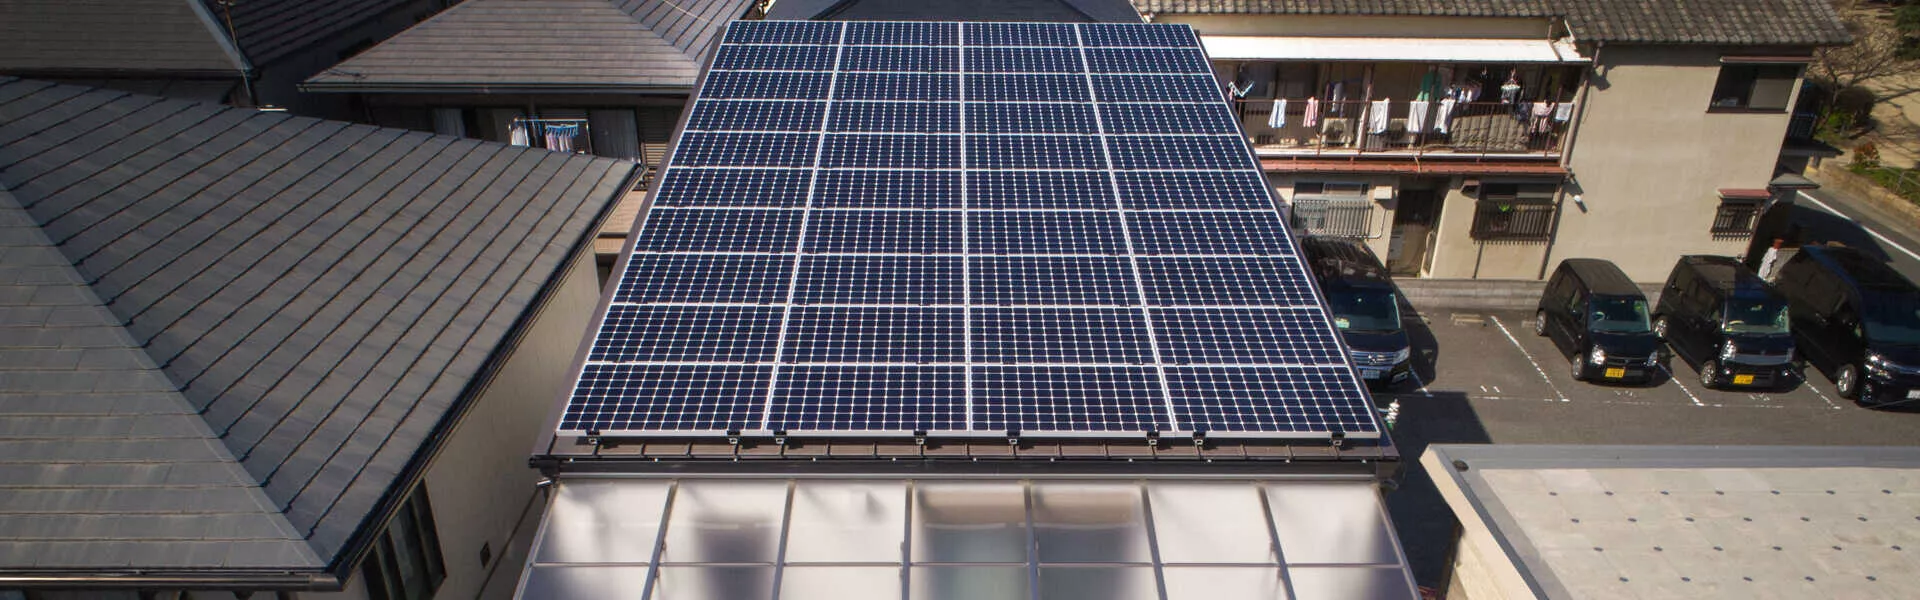 solar panels on Japanese home